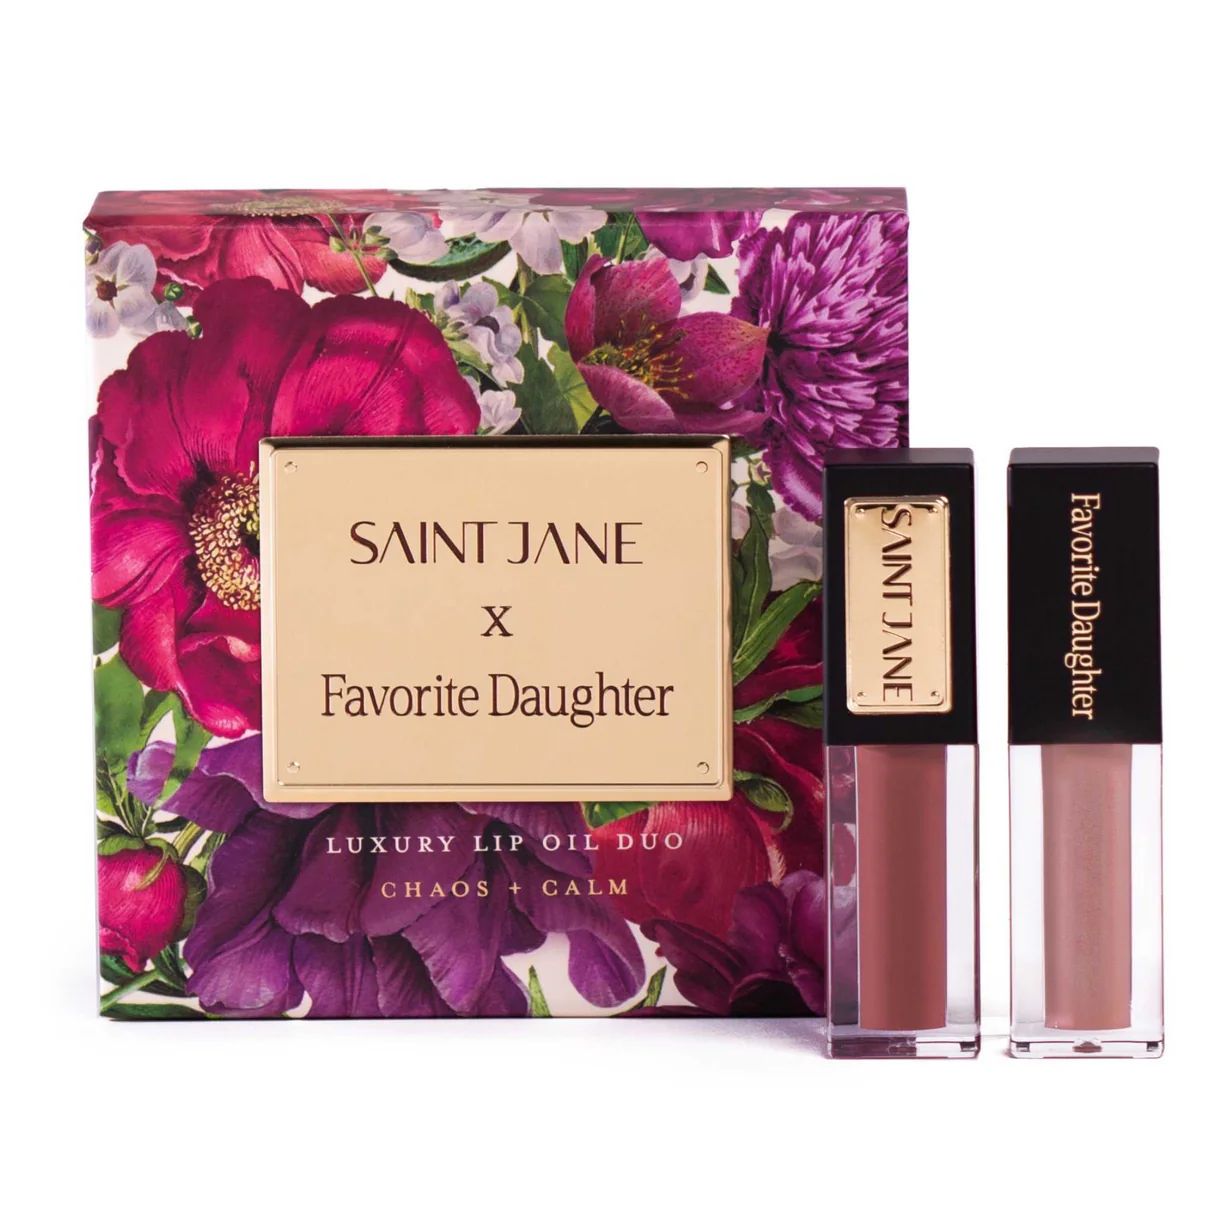 Luxury Lip Oil Duo x Favorite Daughter | Saint Jane Beauty